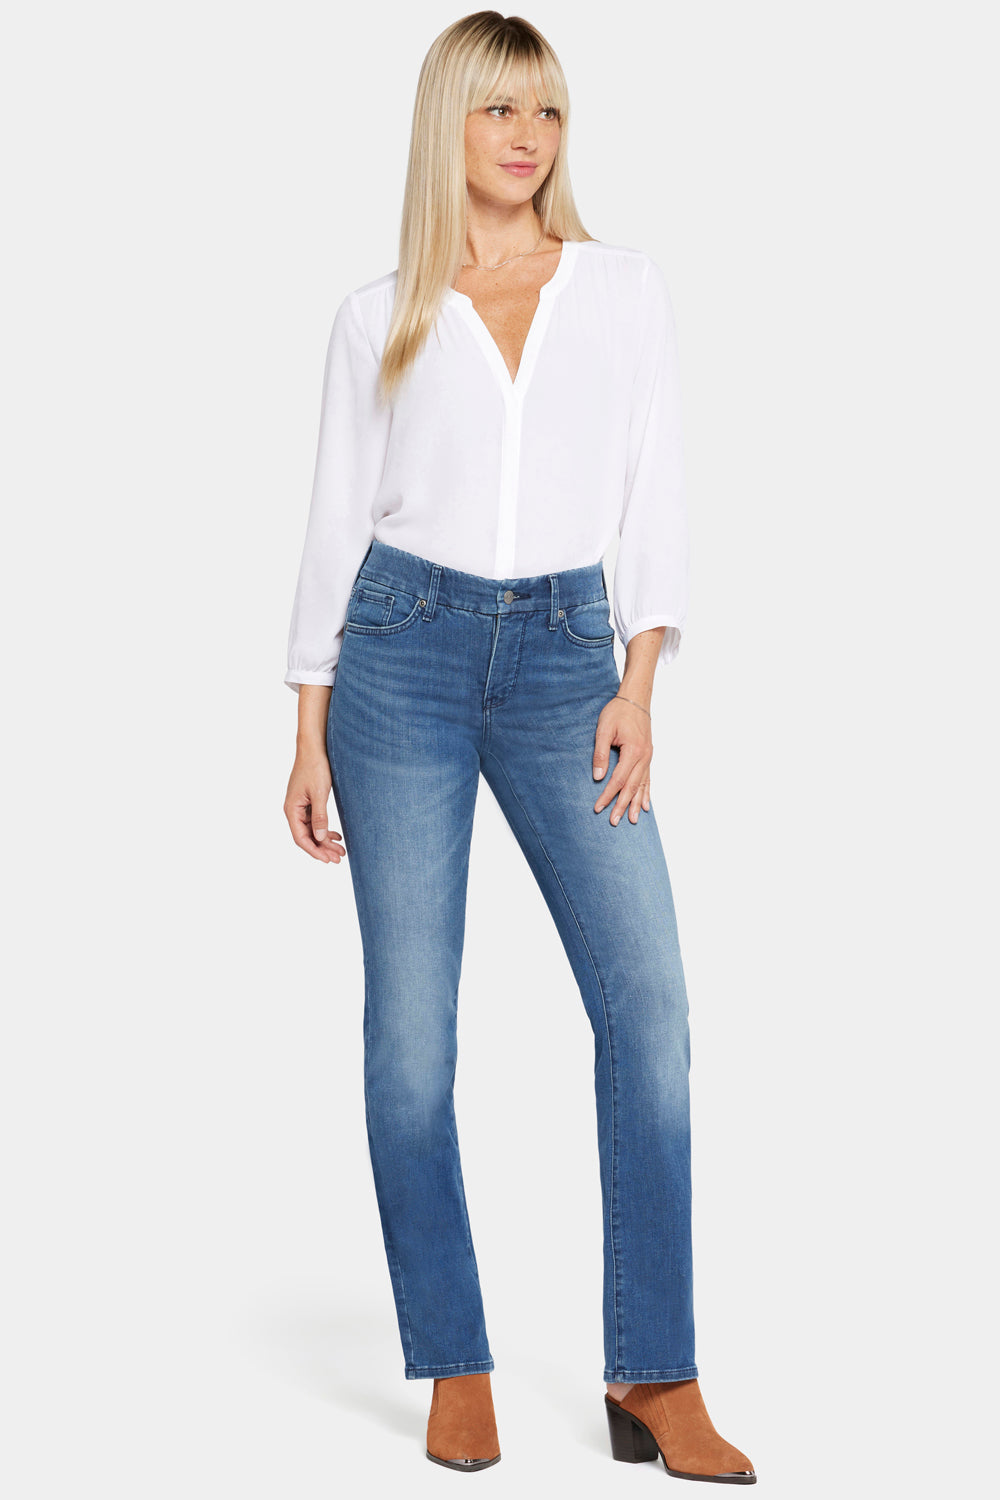 NYDJ Waist-Match™ Marilyn Straight Jeans  - Caliente